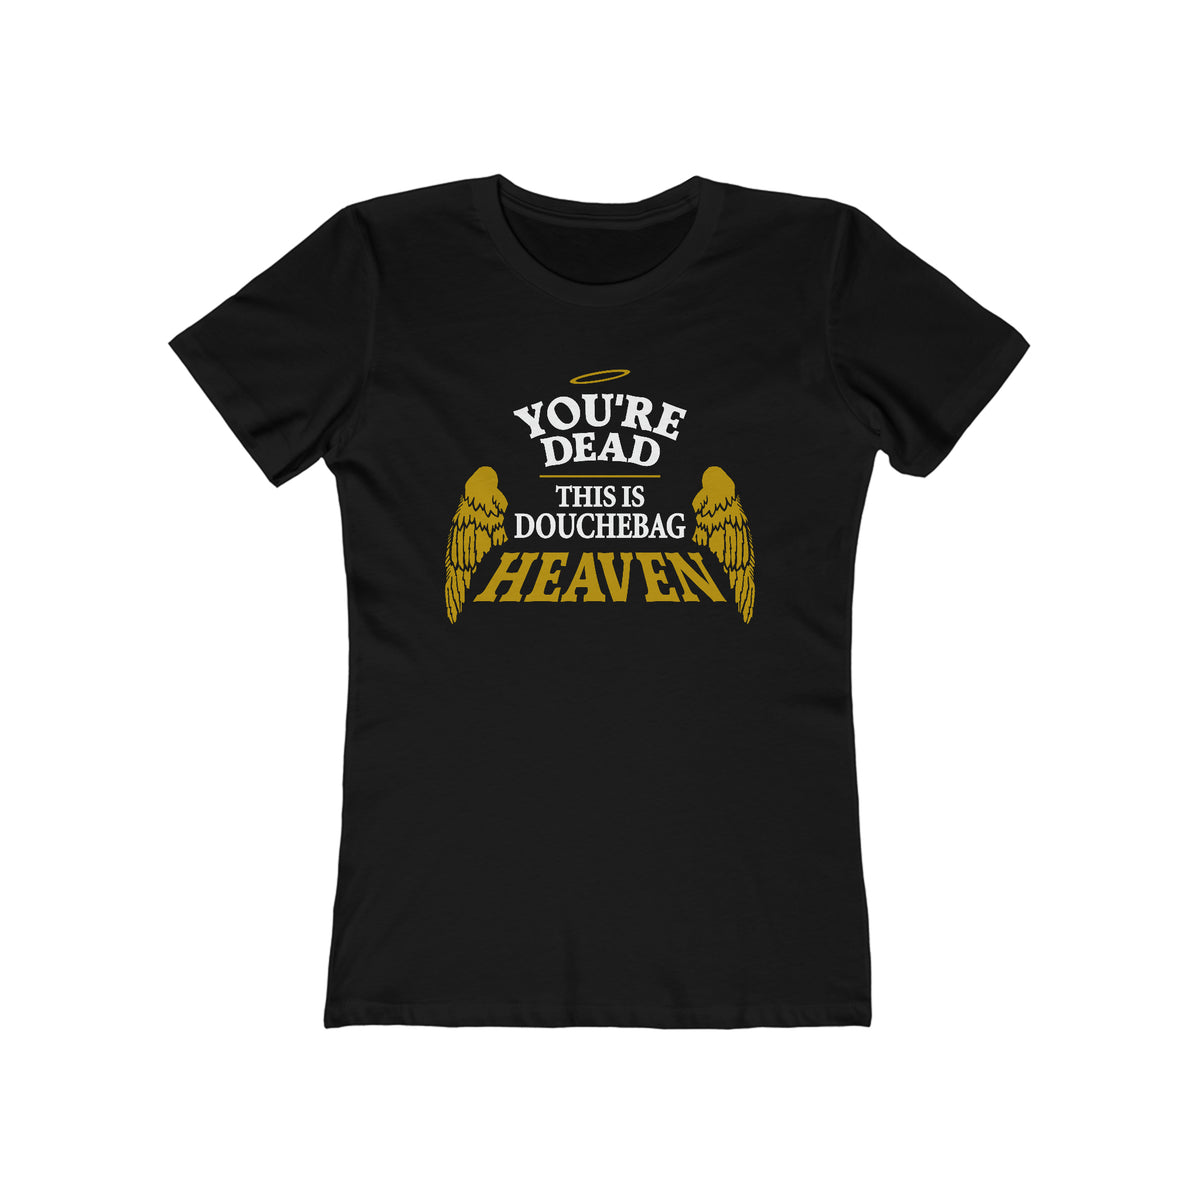 You're Dead - This Is Douchebag Heaven - Women’s T-Shirt